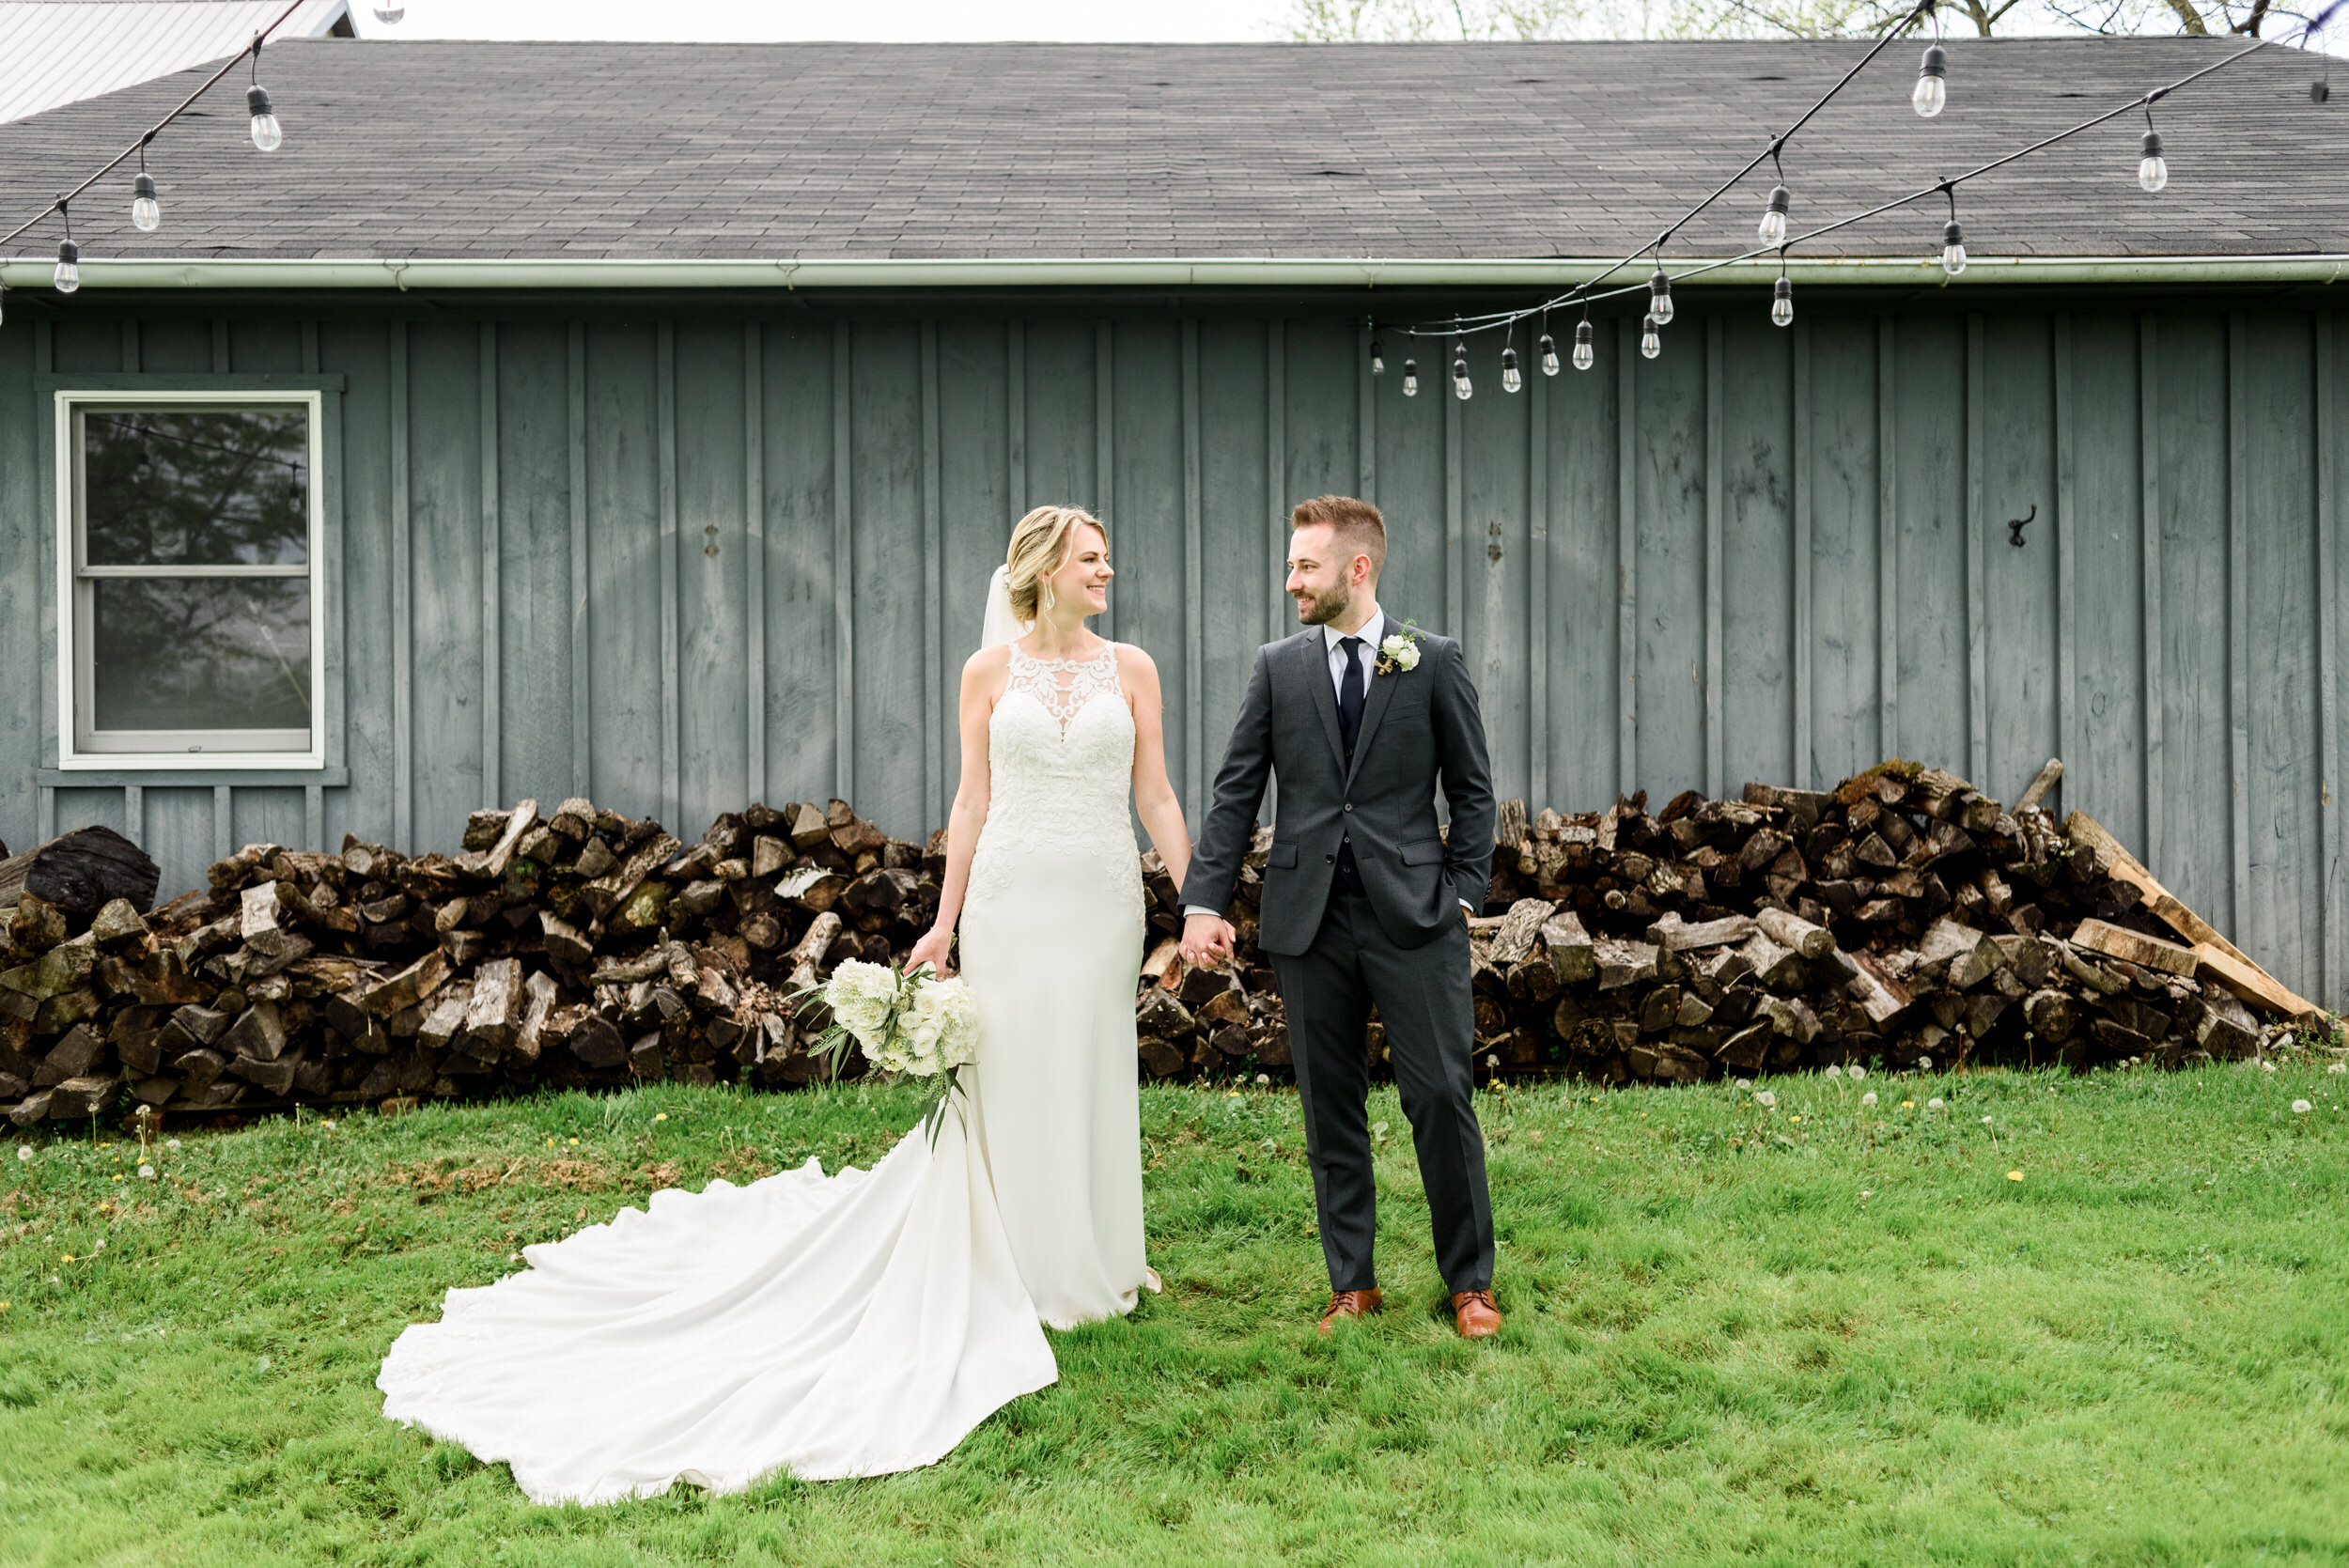 Bride and groom - The Farm Bakery and Events wedding photos